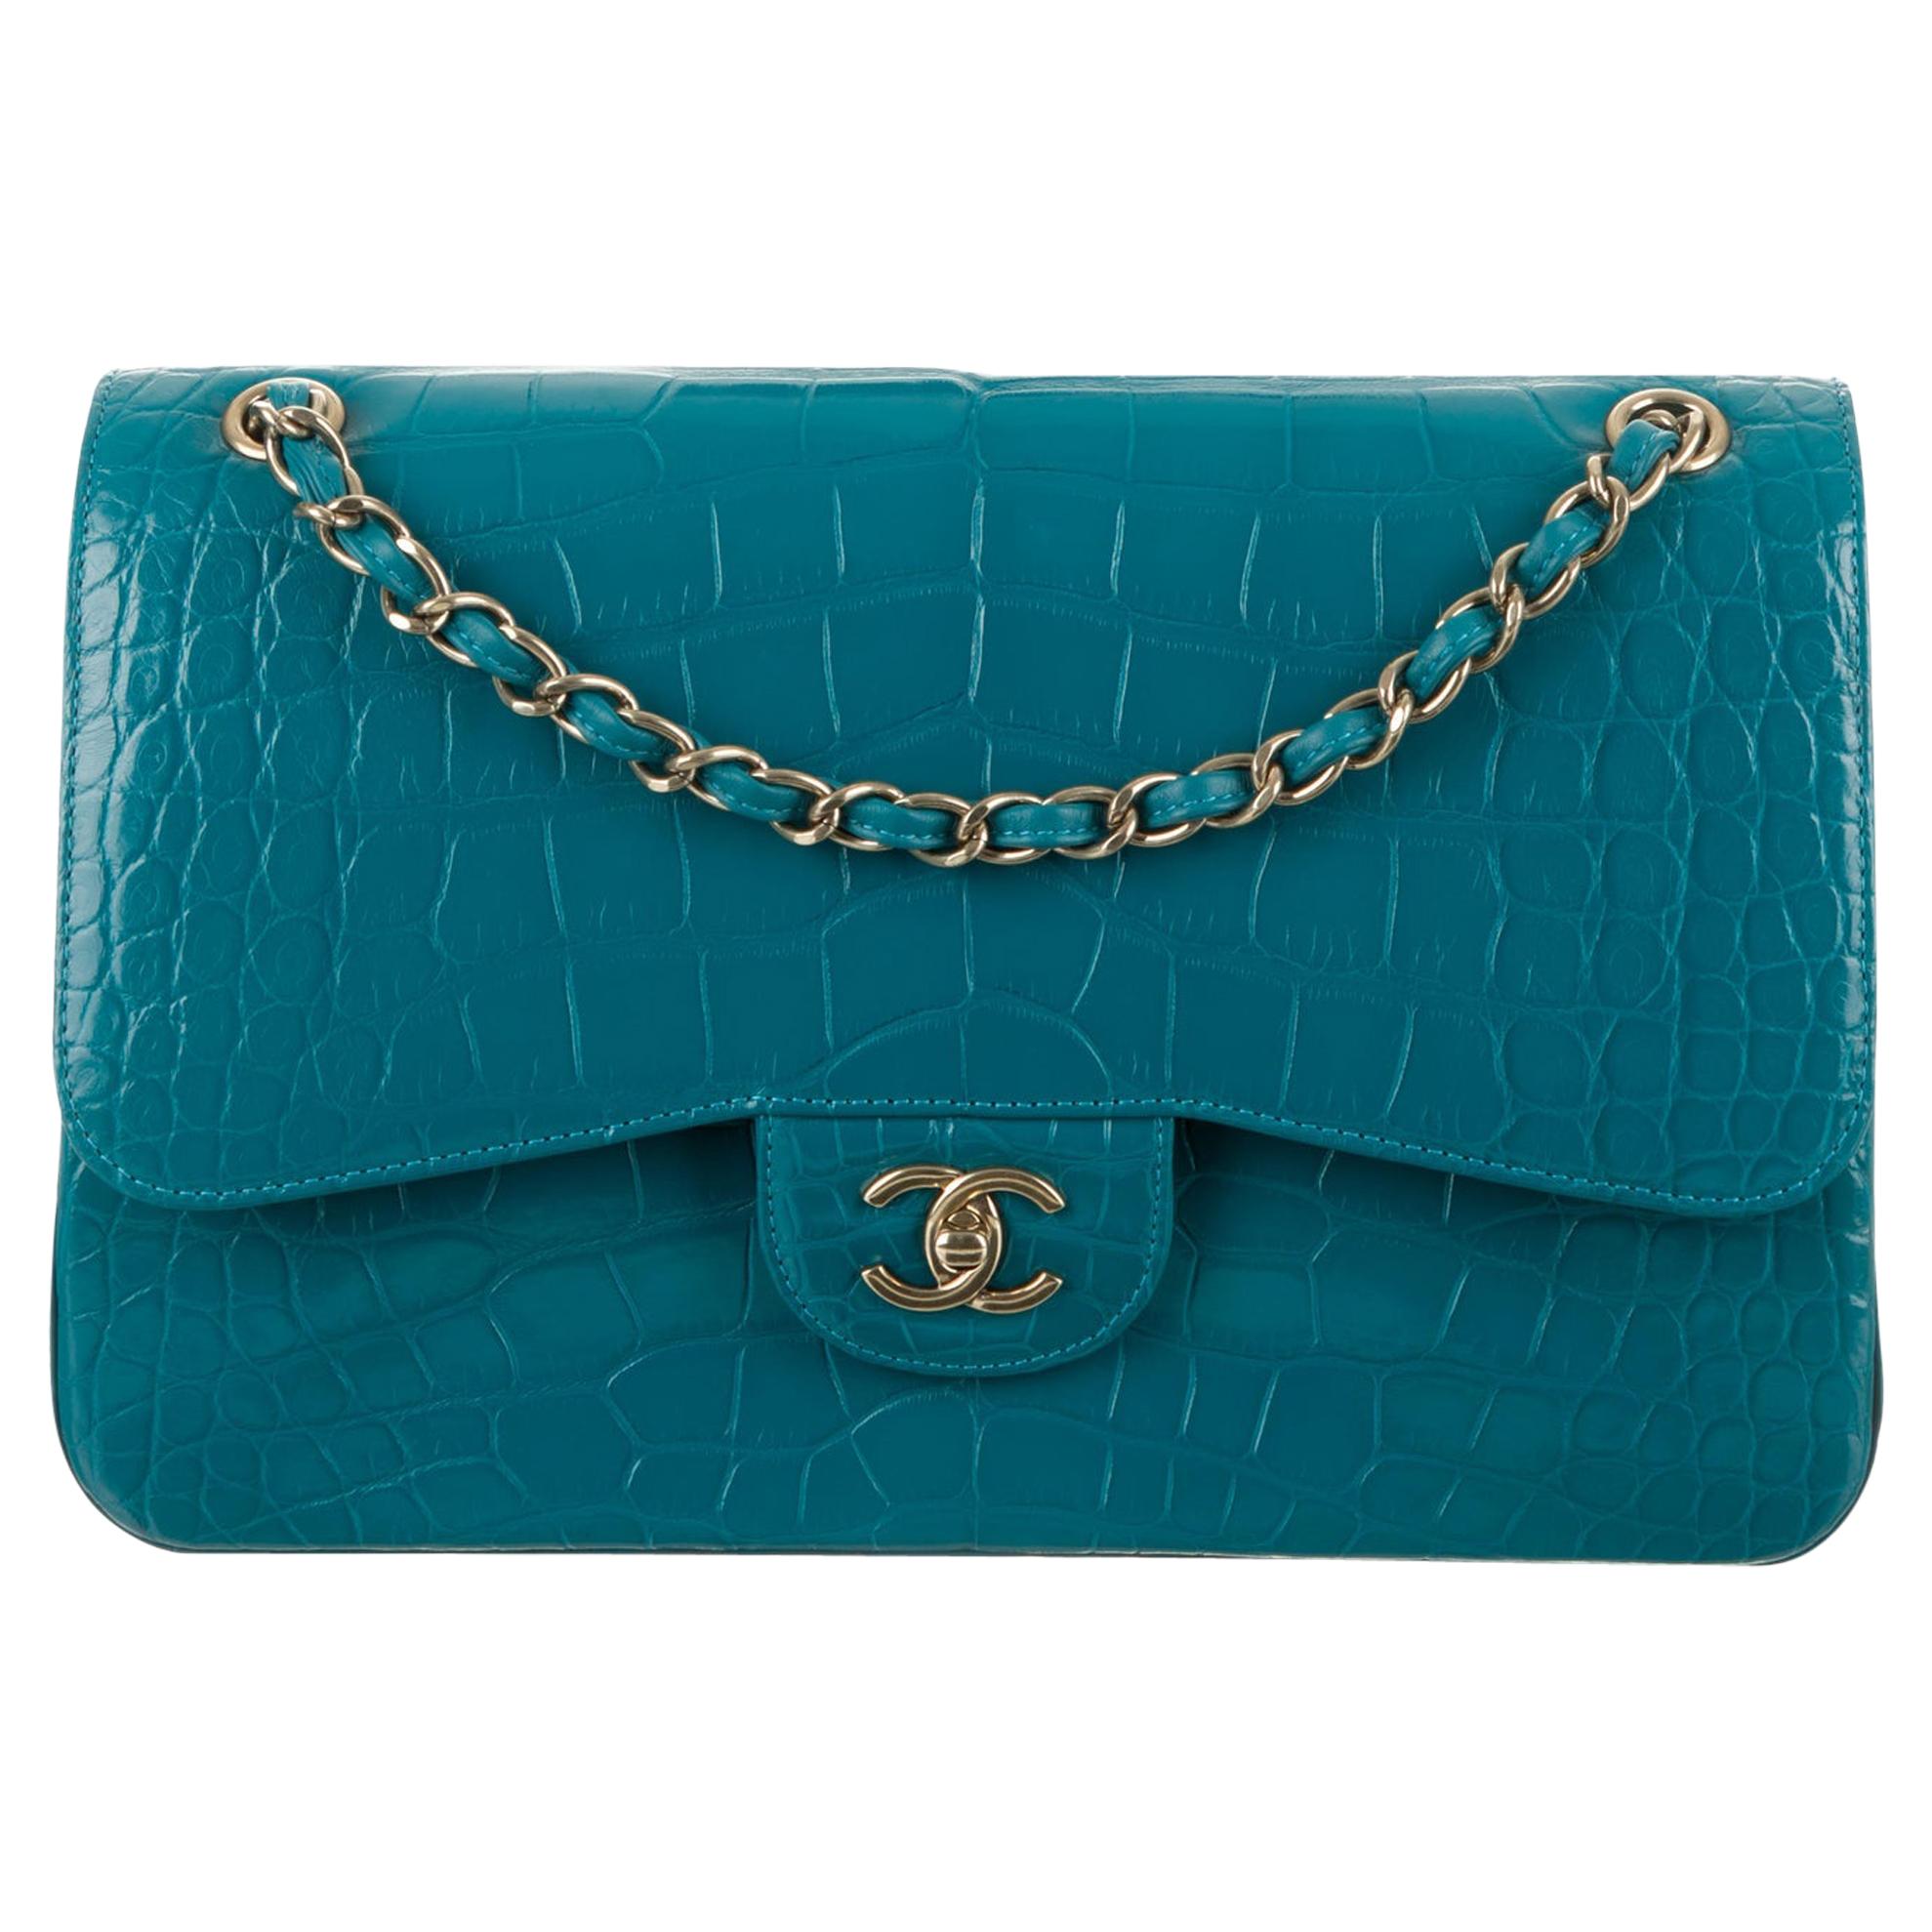 Chanel NEW Turquoise Alligator Exotic Skin Gold Large Shoulder Flap Bag in Box